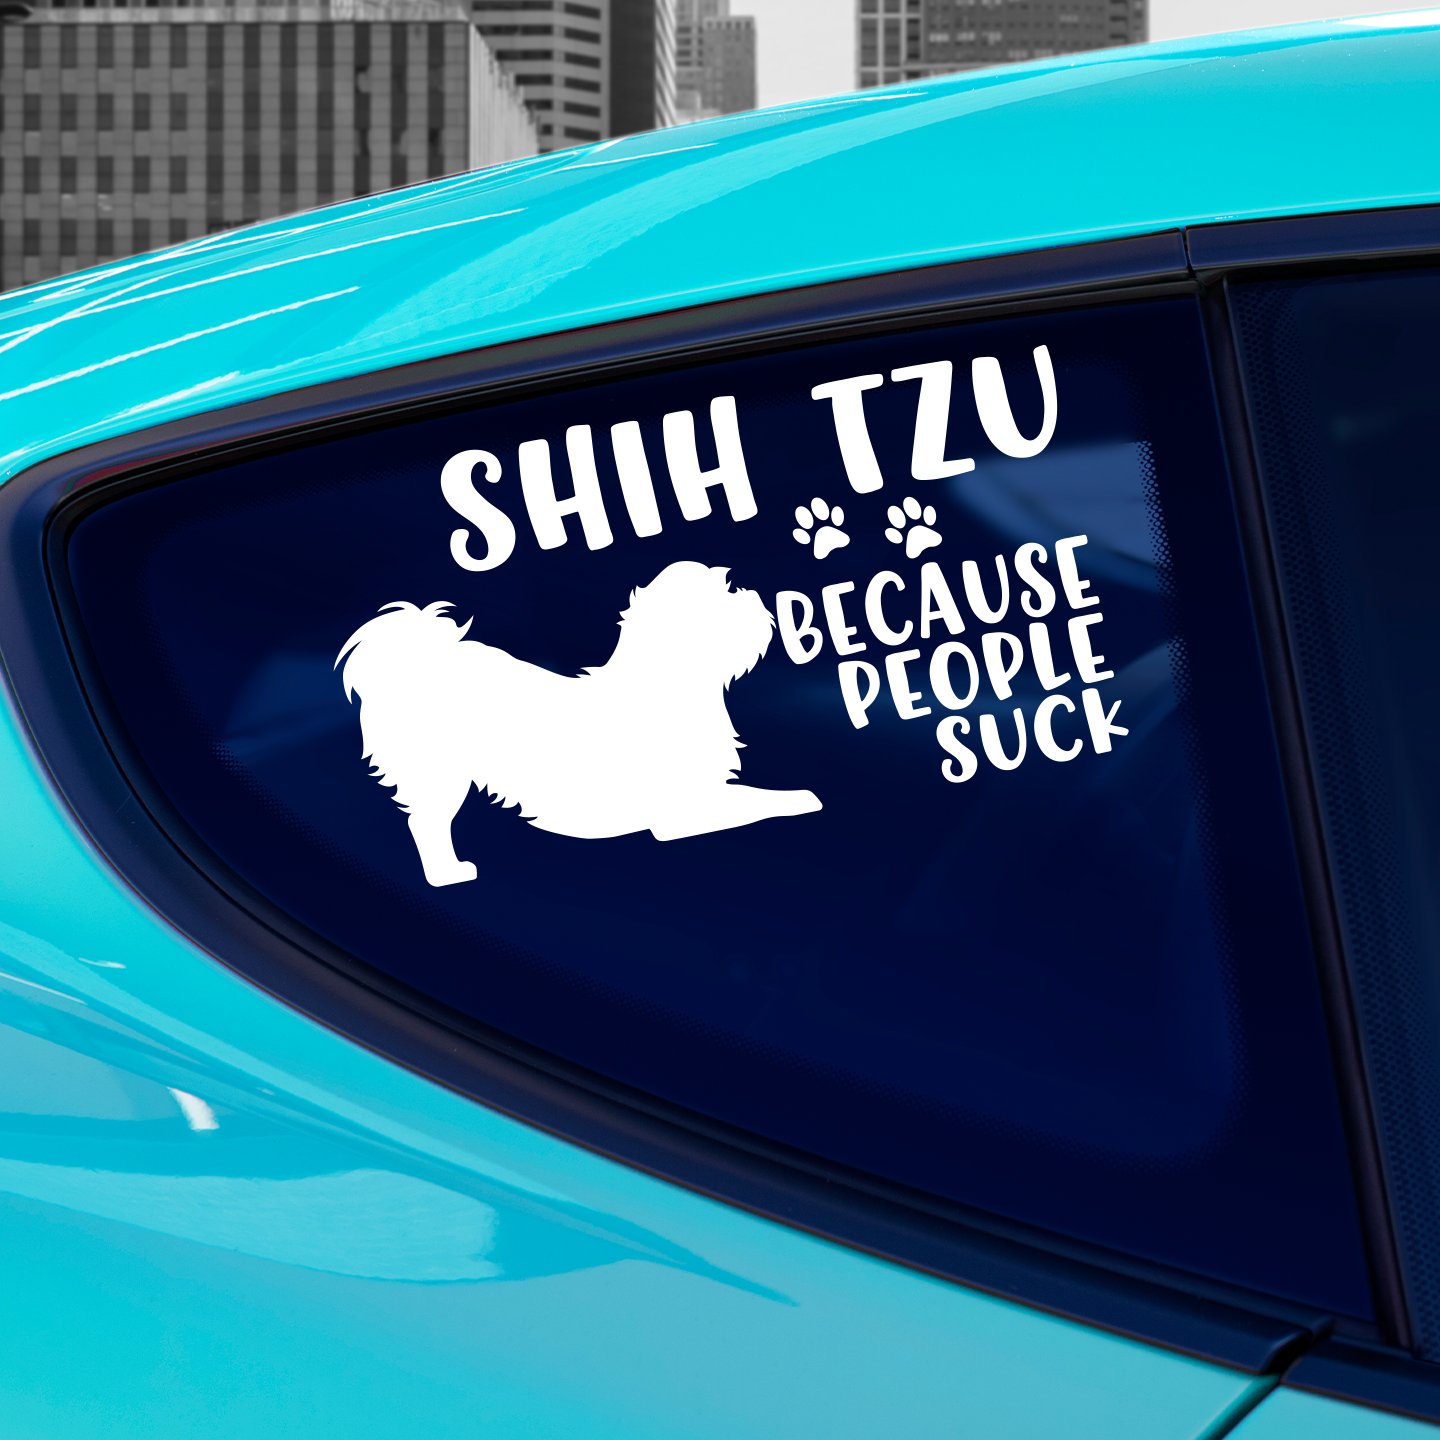 Shih Tzu Because People Suck Sticker